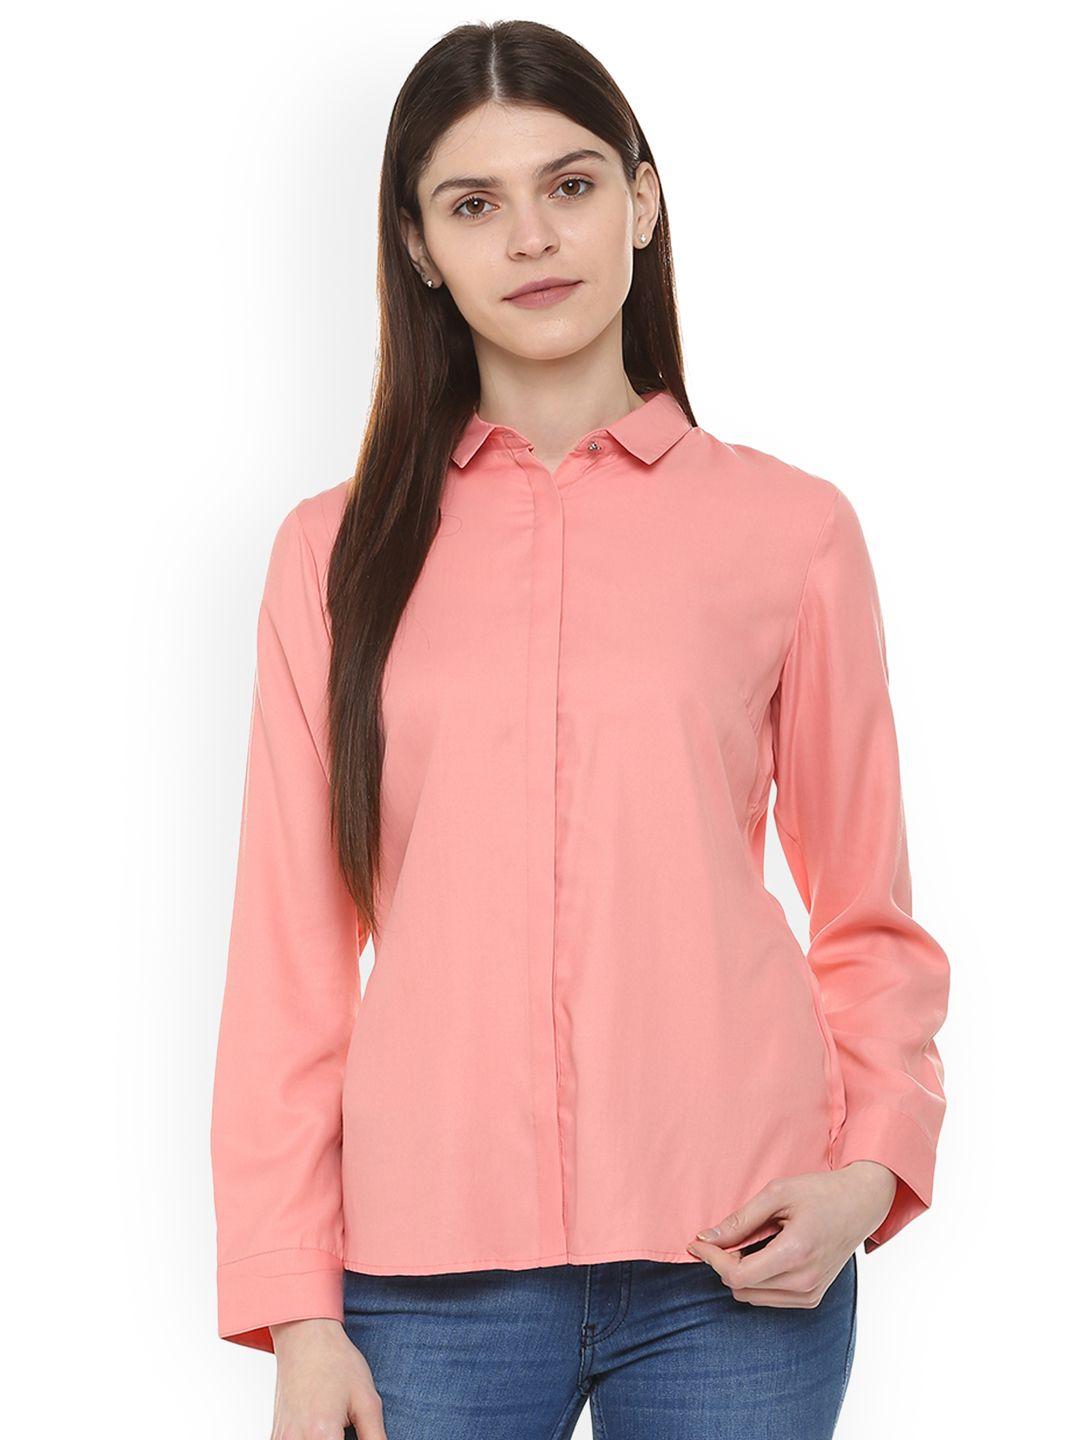 allen solly woman women pink regular fit solid casual shirt